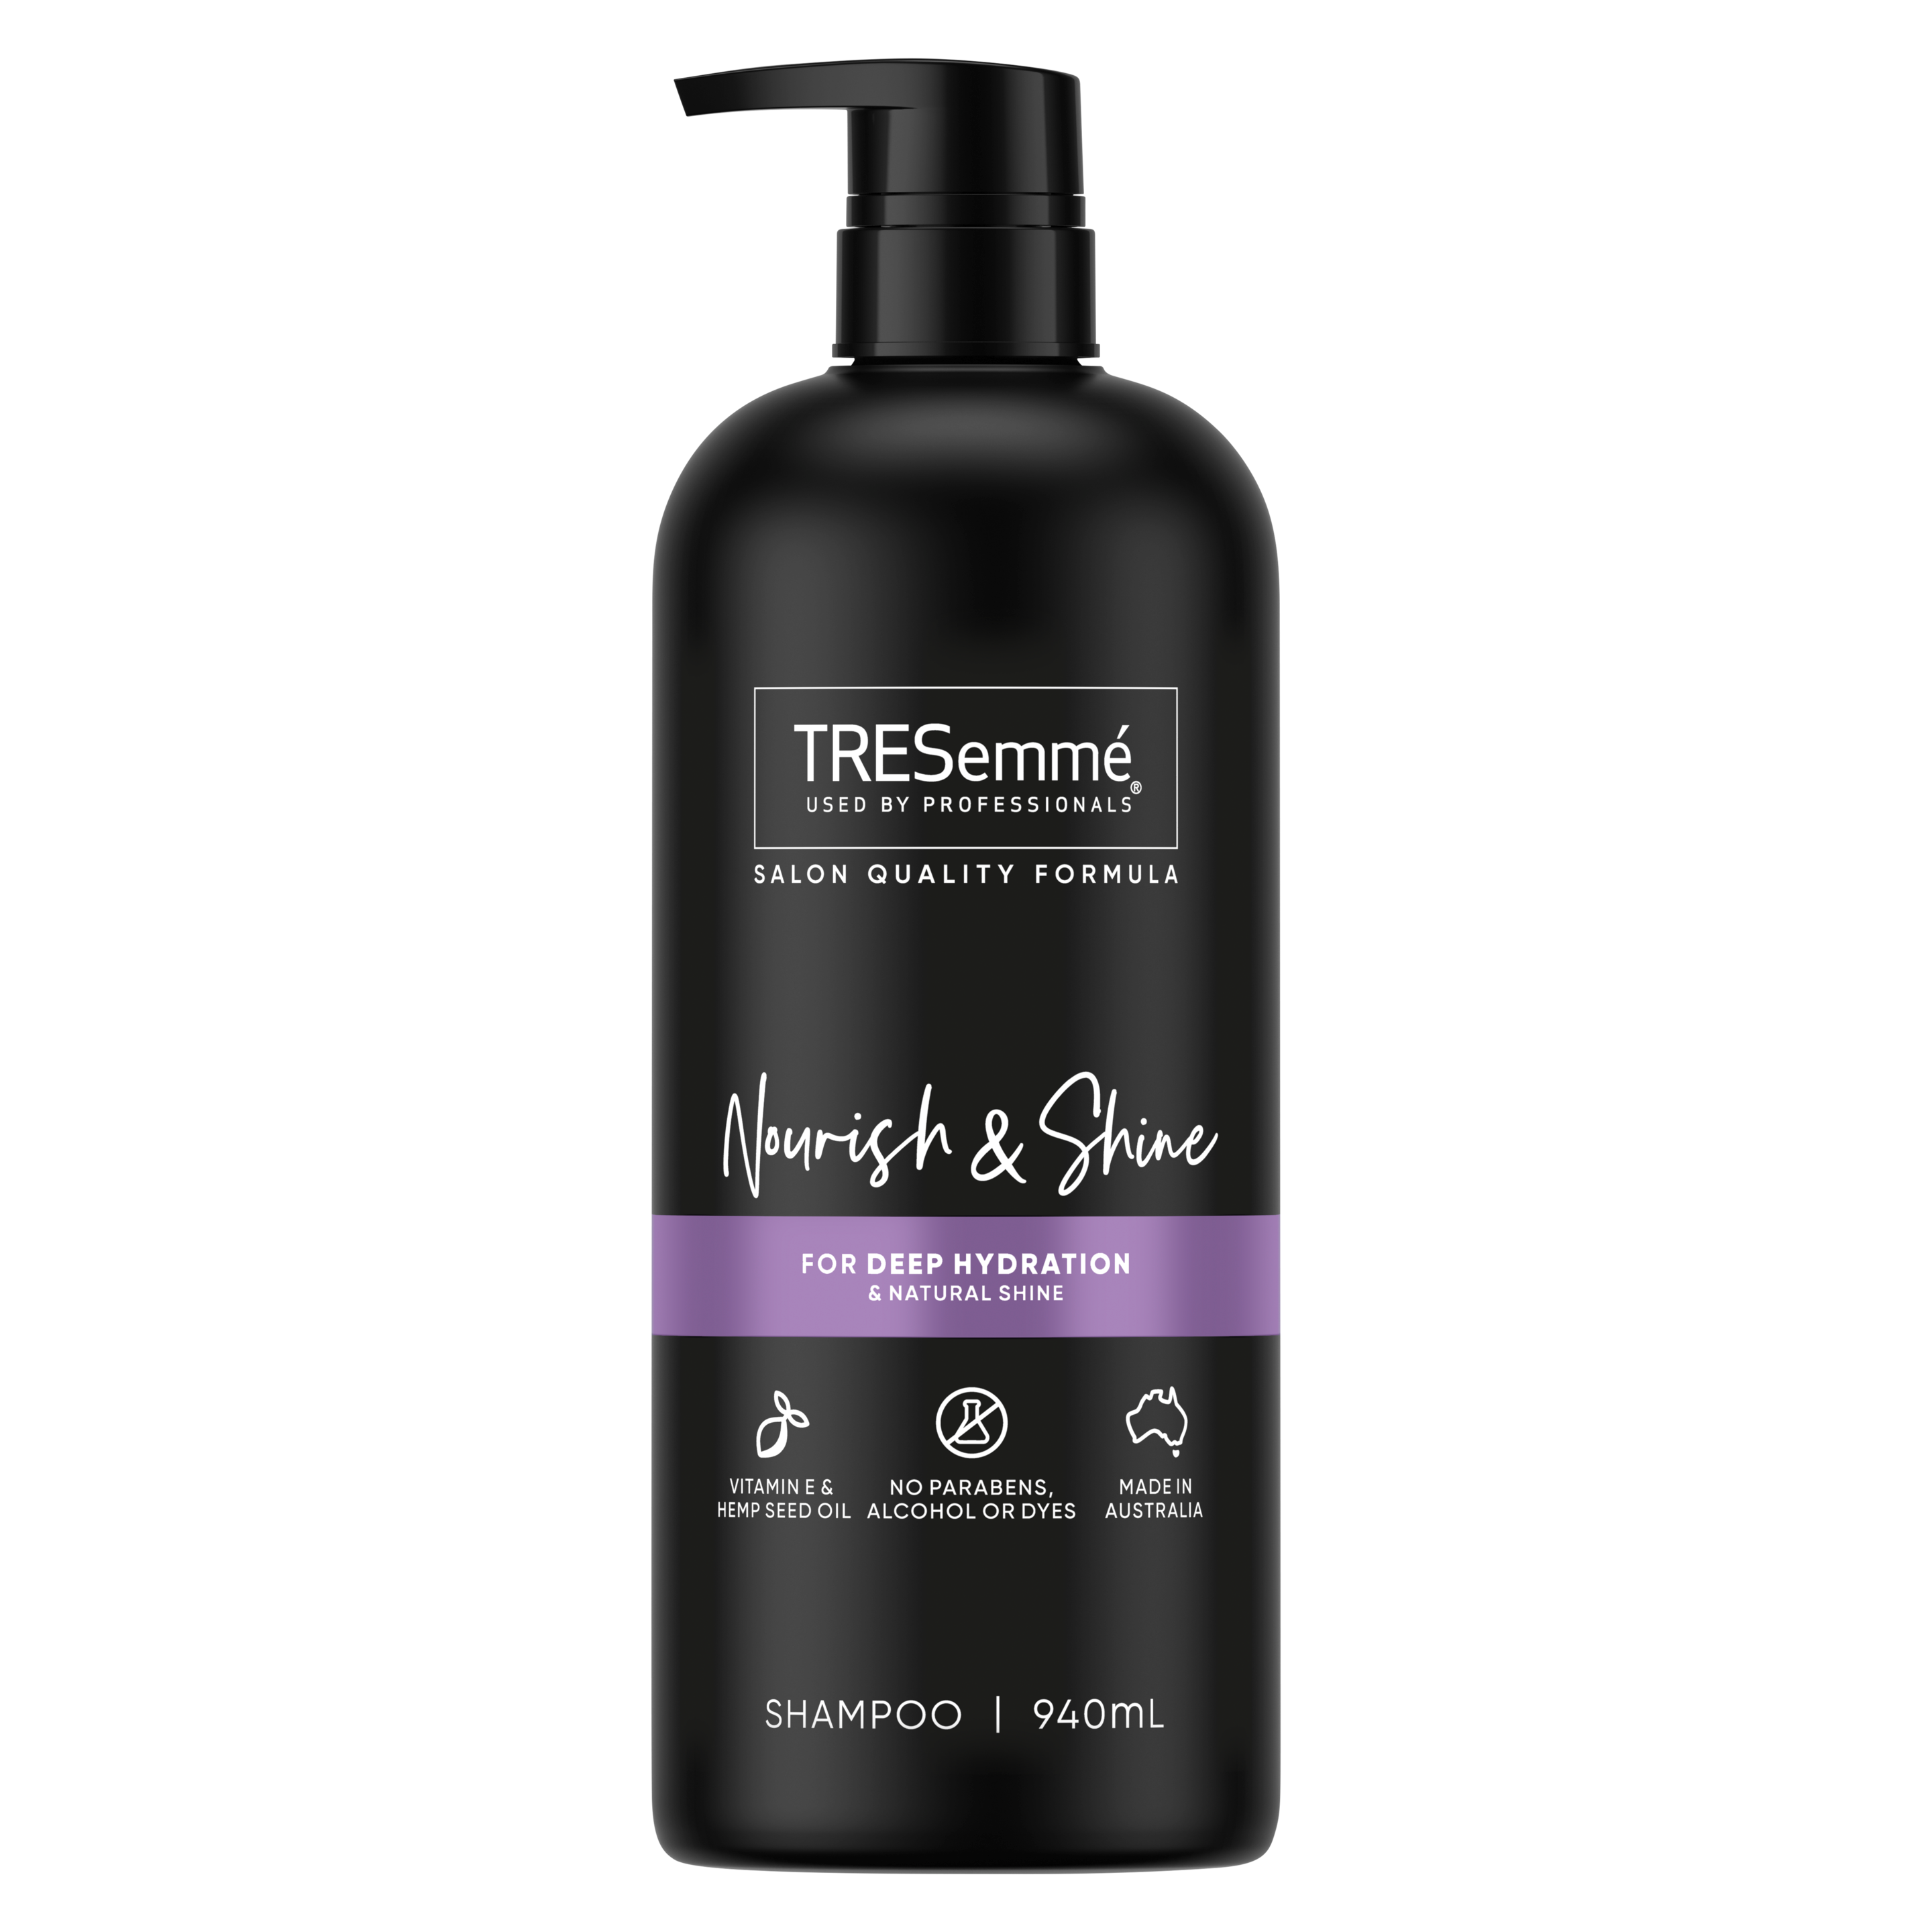 A 940ml bottle of TRESemmé Nourish & Shine Shampoo